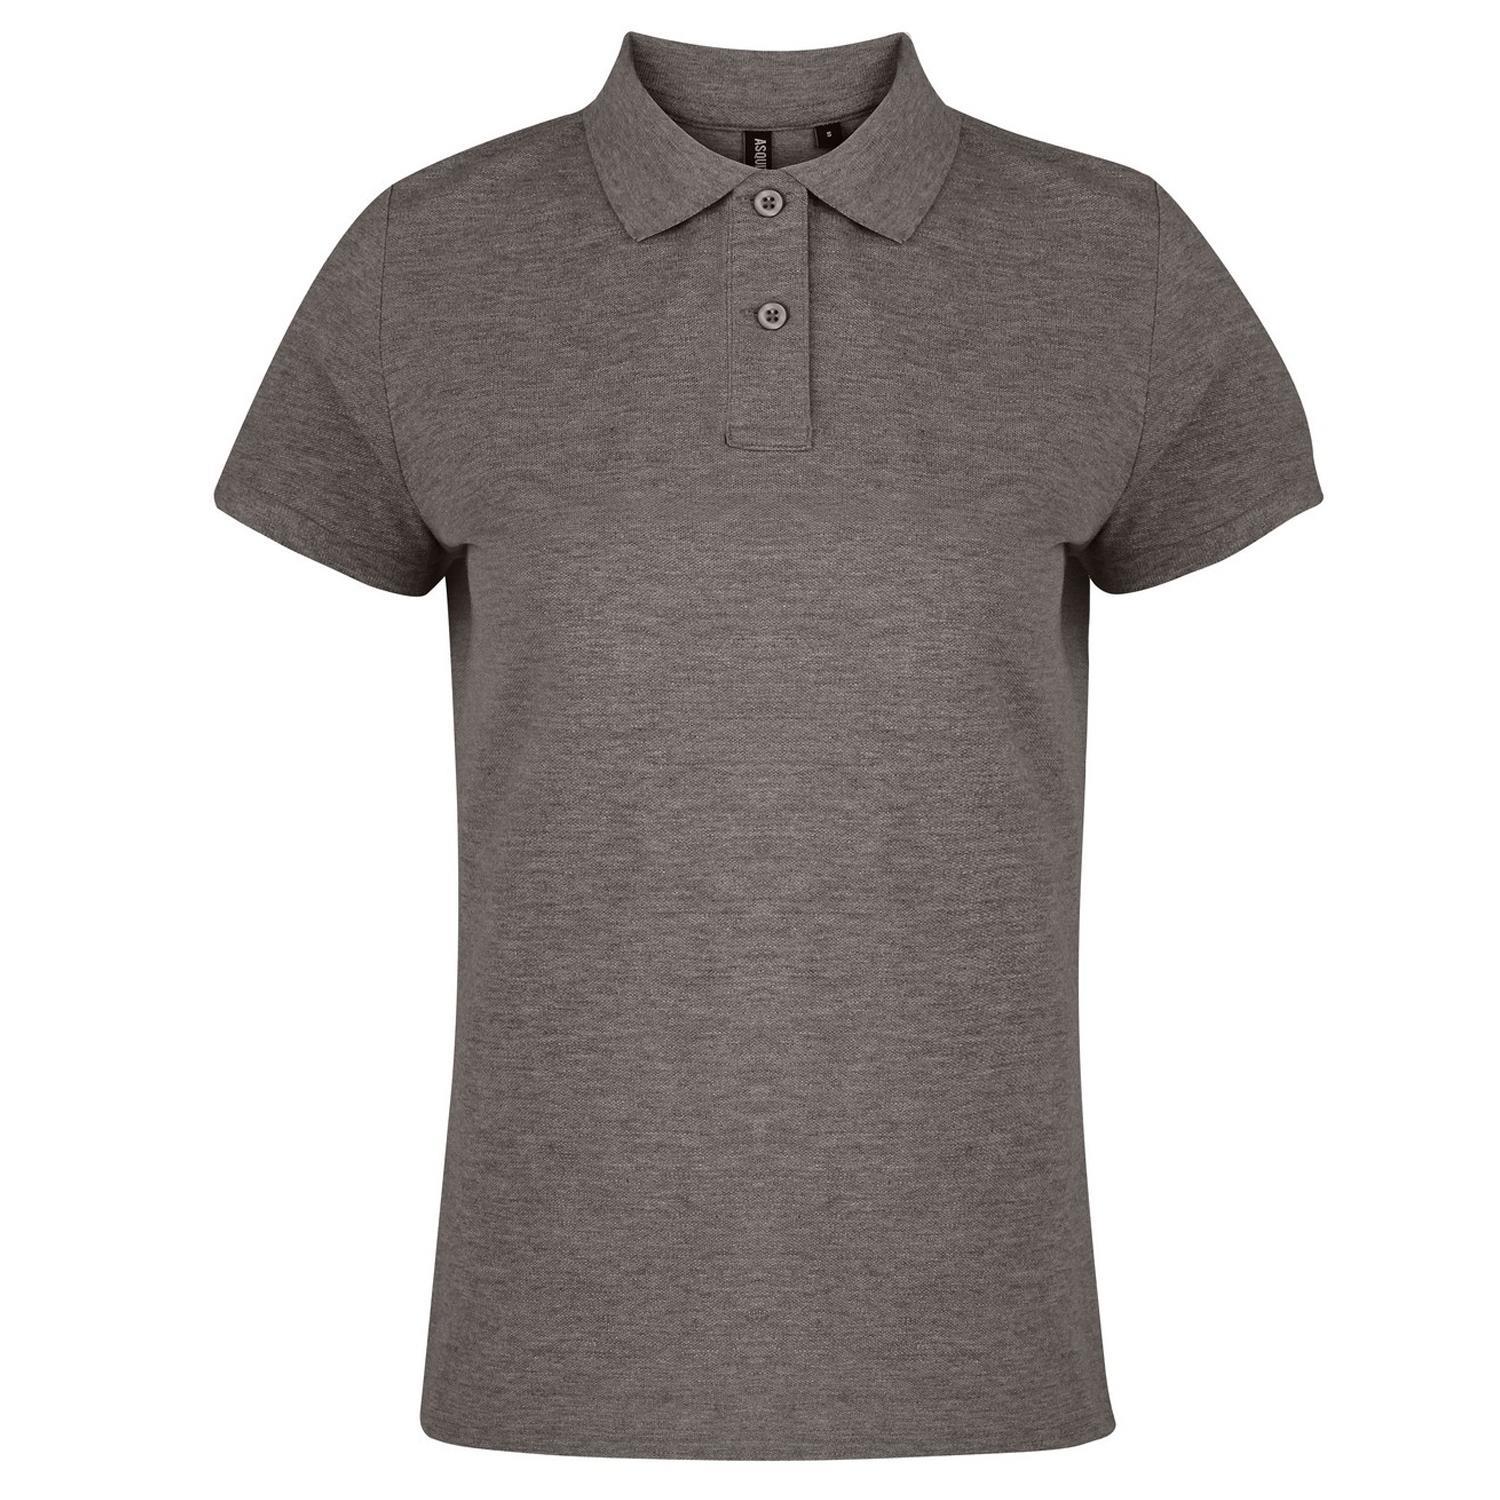 Asquith & Fox Womens/Ladies Plain Short Sleeve Polo Shirt (Charcoal) (XL)